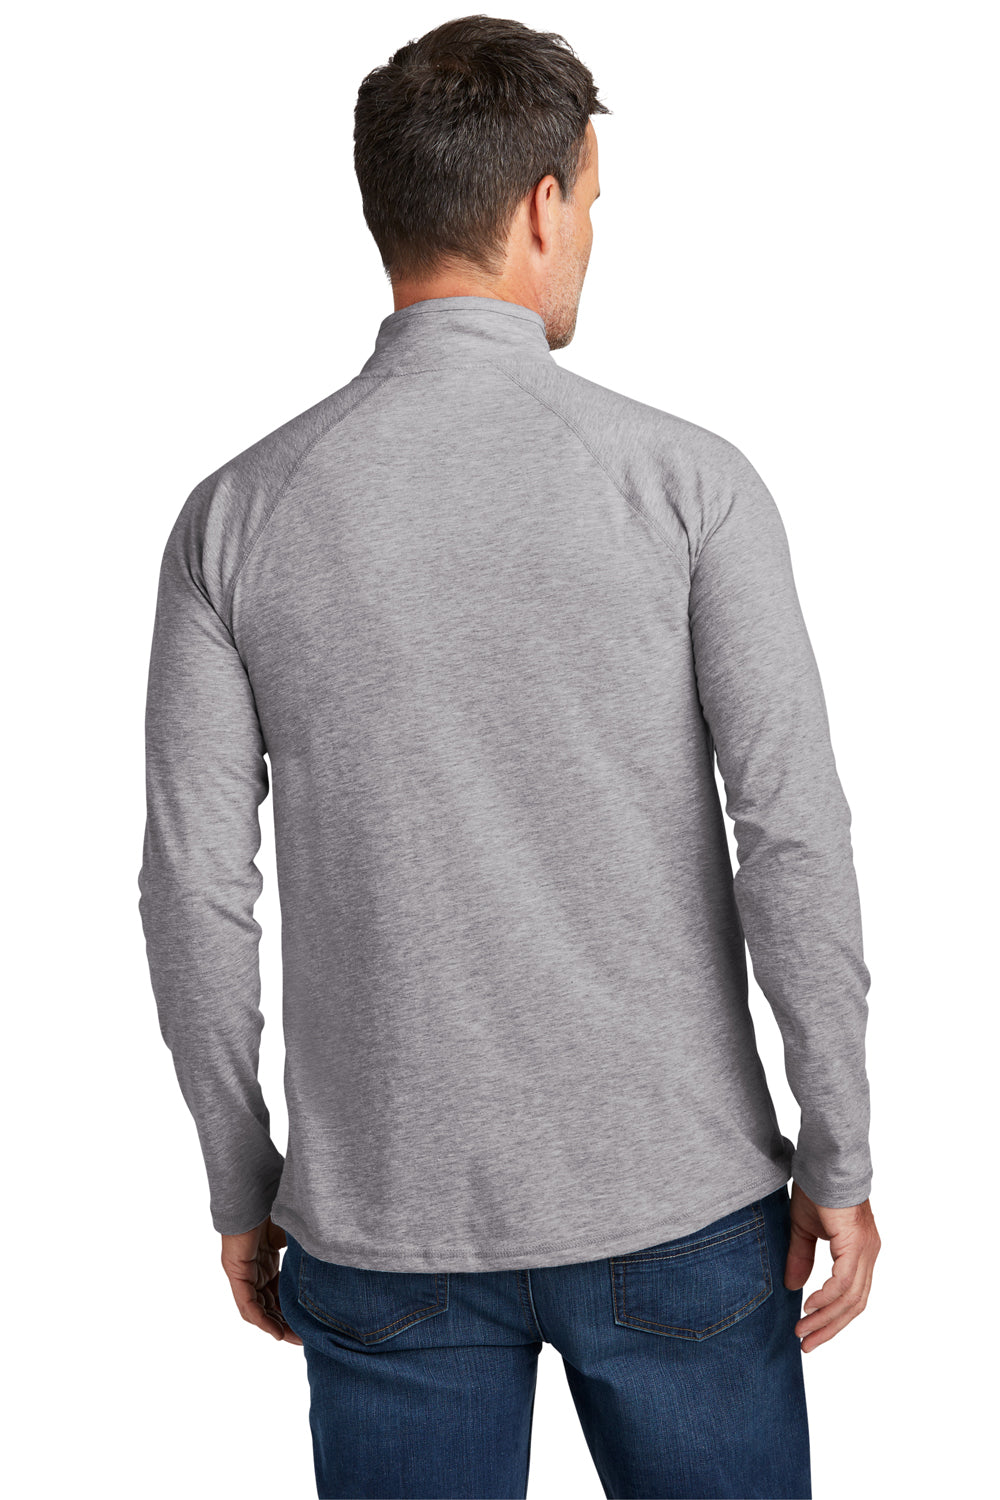 Carhartt CT104255 Mens Force Moisture Wicking 1/4 Zip Long Sleeve T-Shirt w/ Pocket Heather Grey Model Back